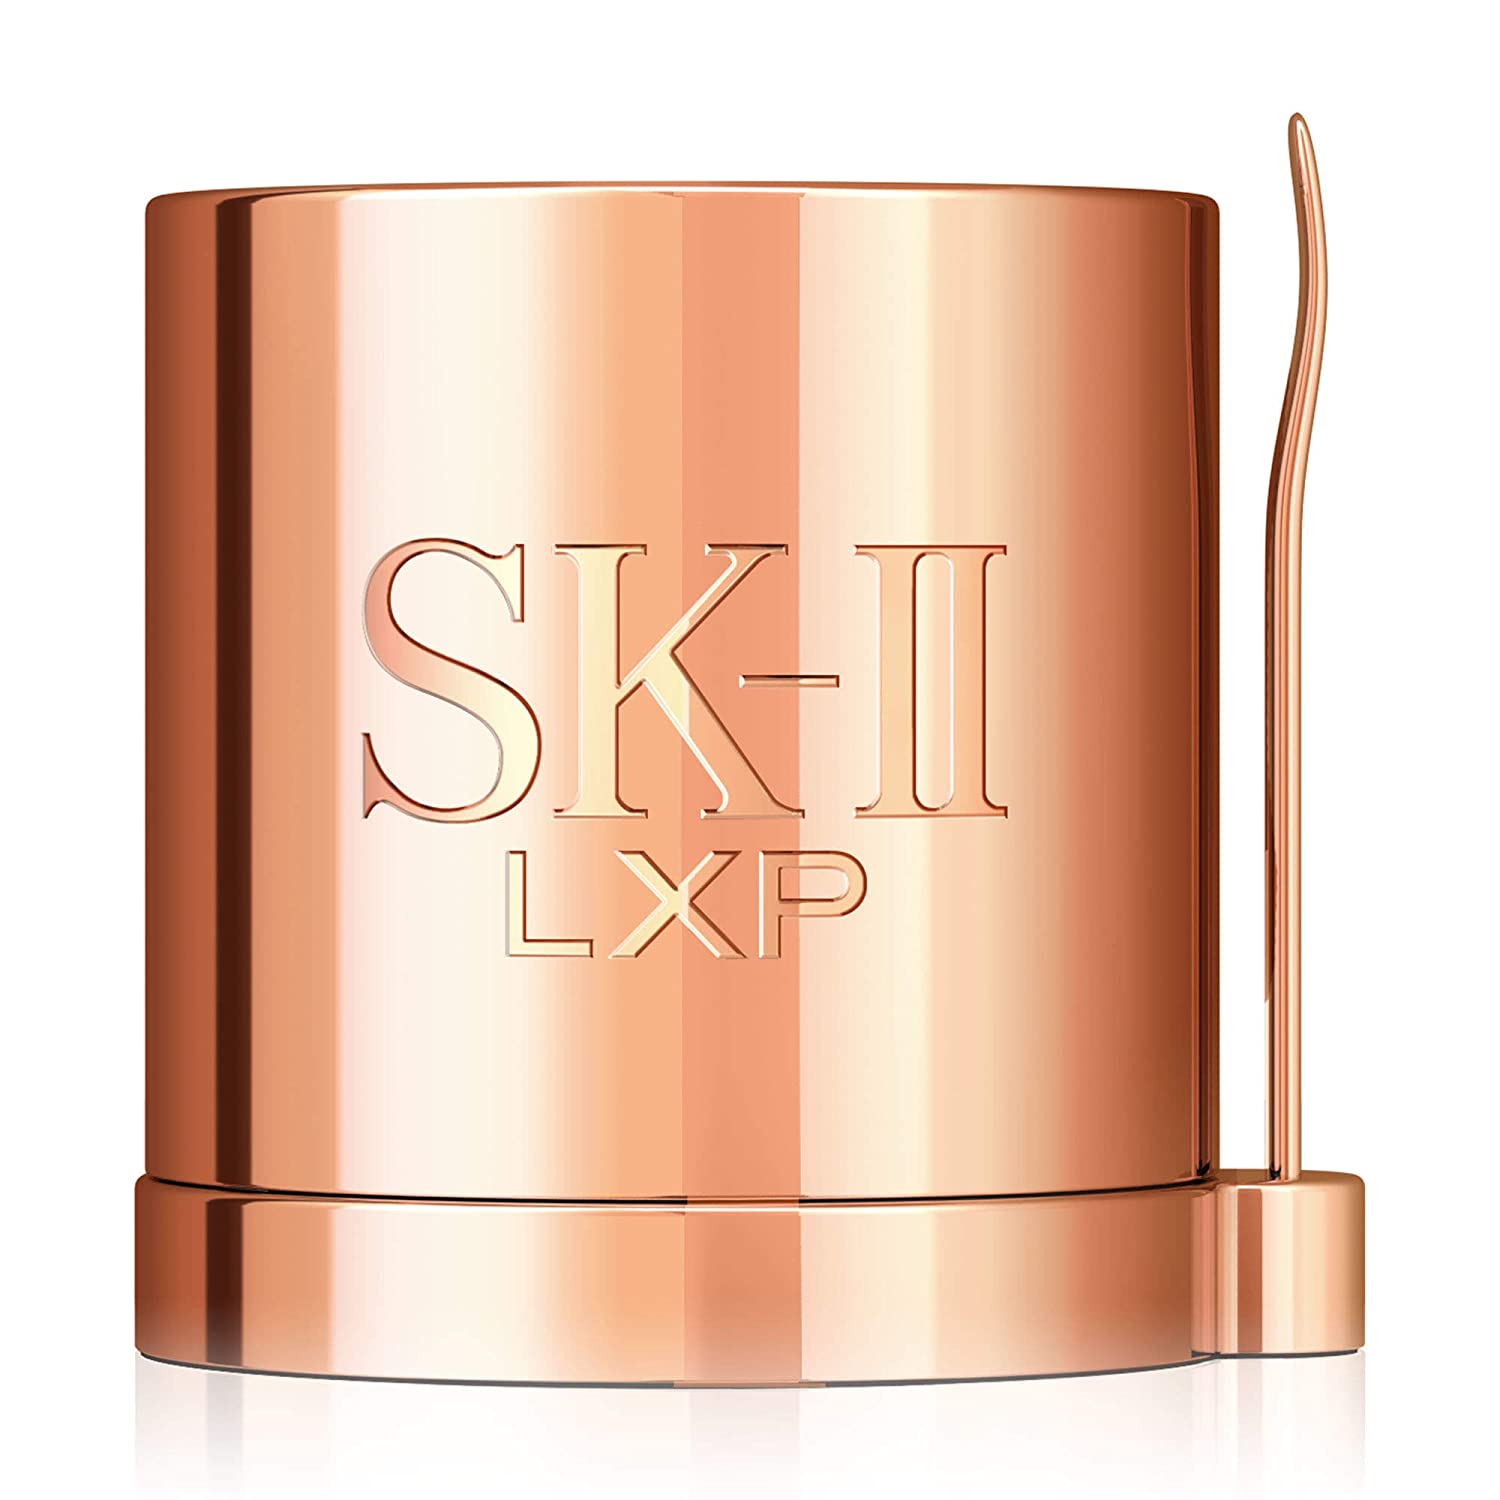 SK-II LXP Ultimate Revival Face Moisturizing Eye Cream - 1.6 Oz-0